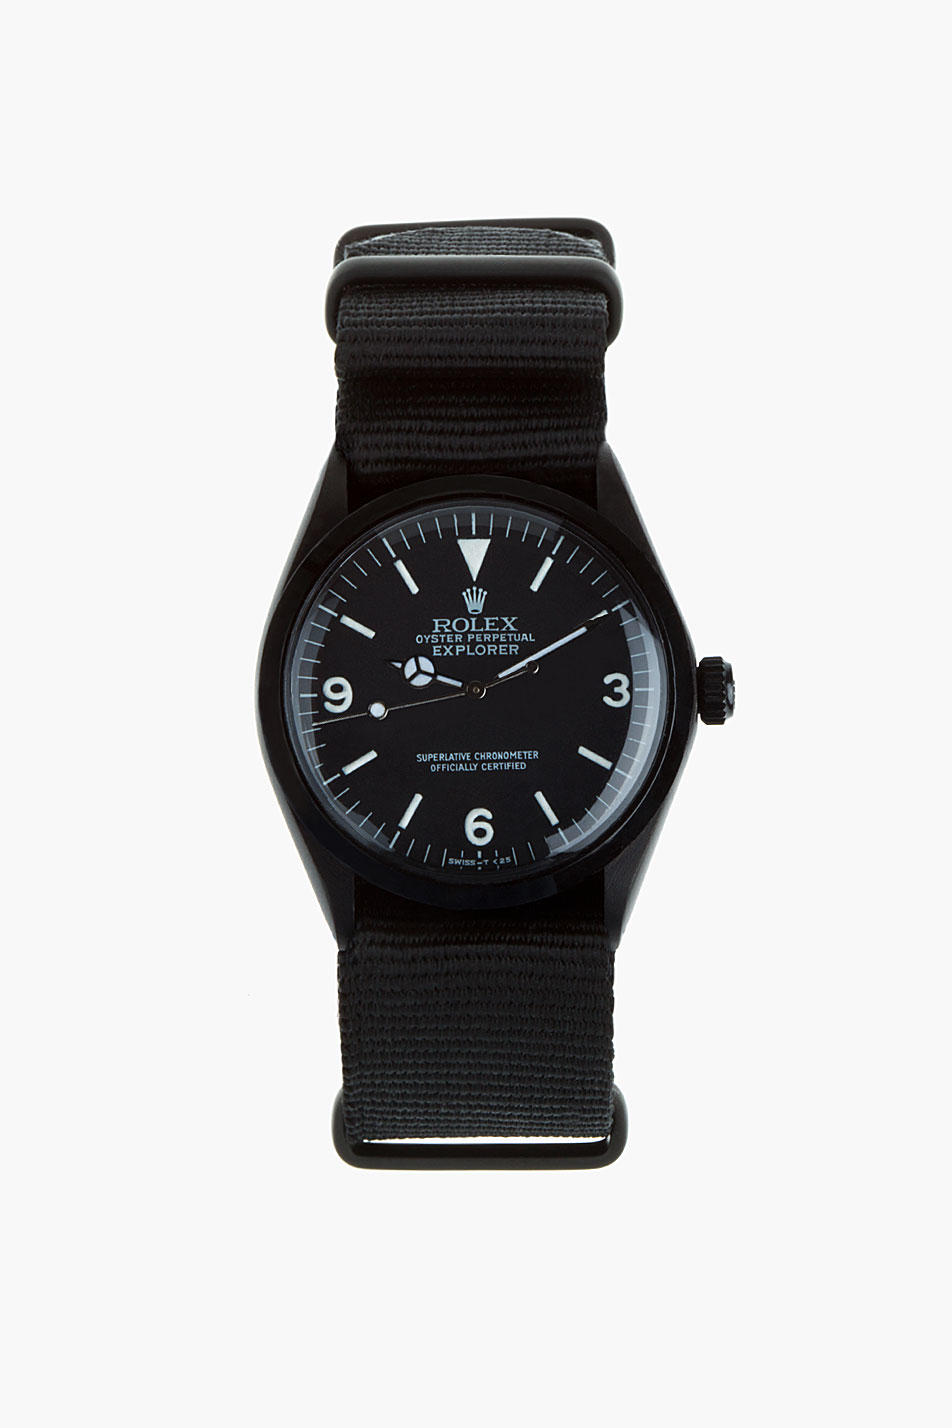 Refurbished Black Rolex Watch Limited Edition 3